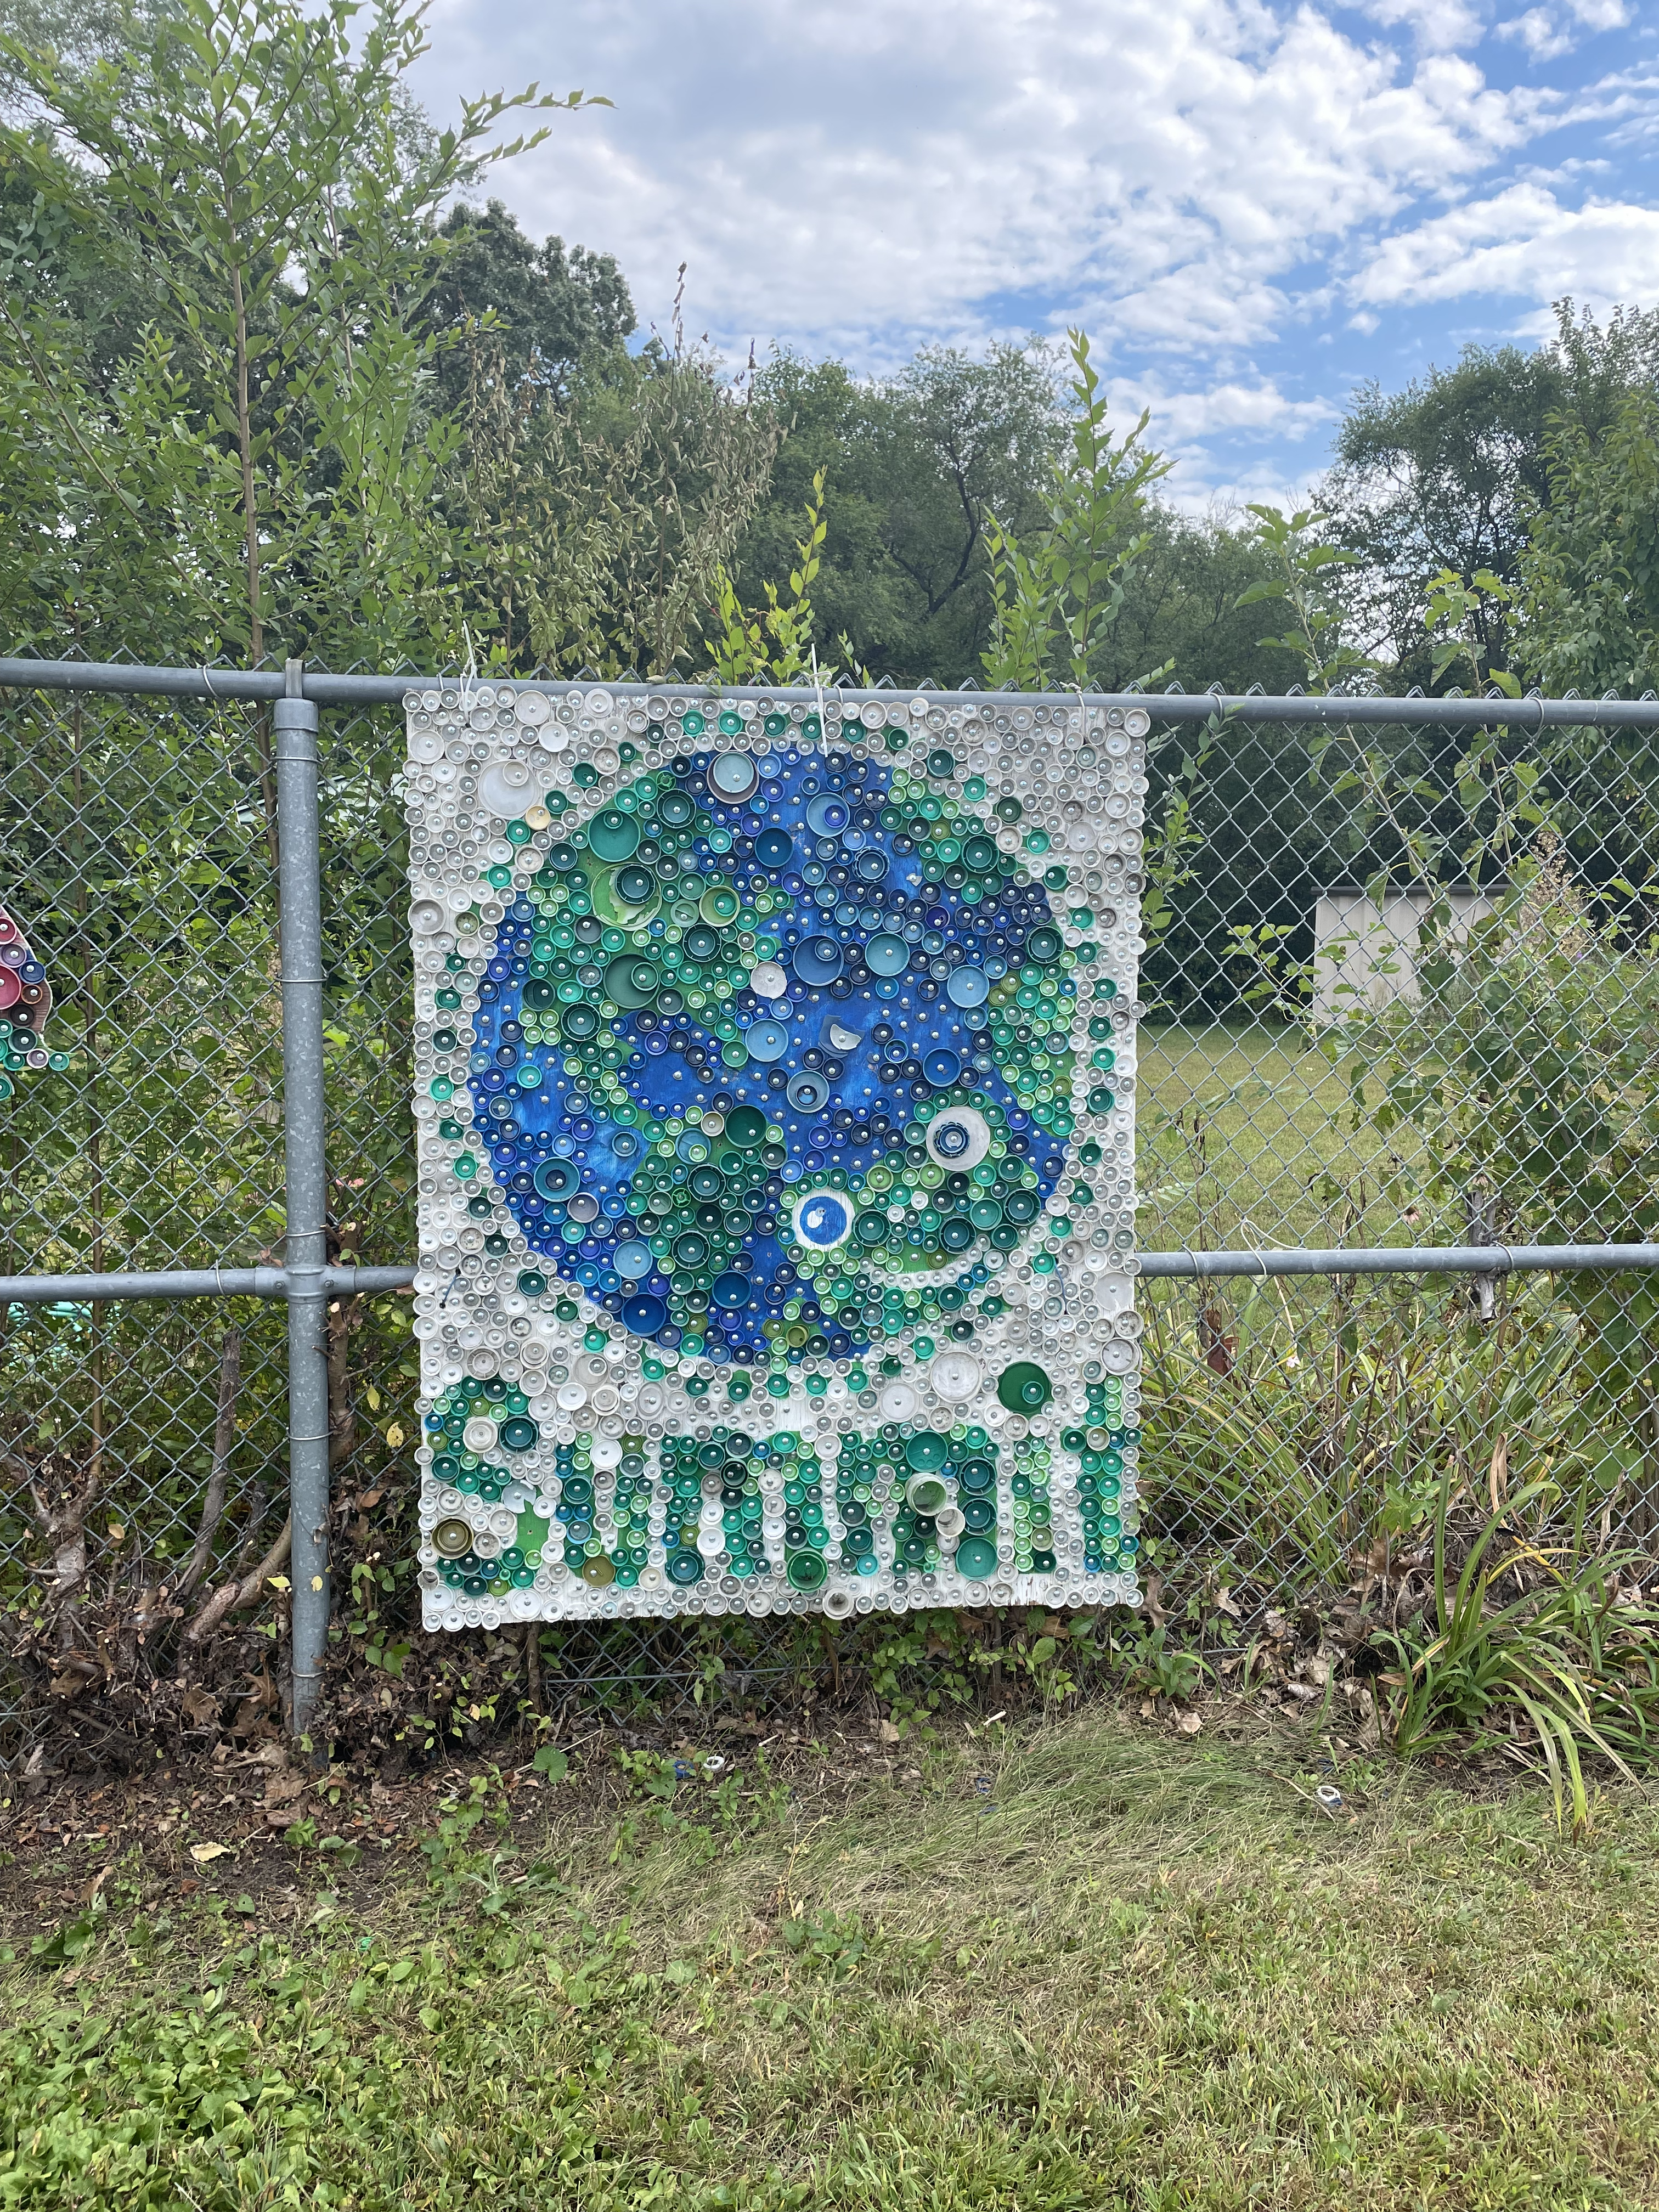 Summit fence